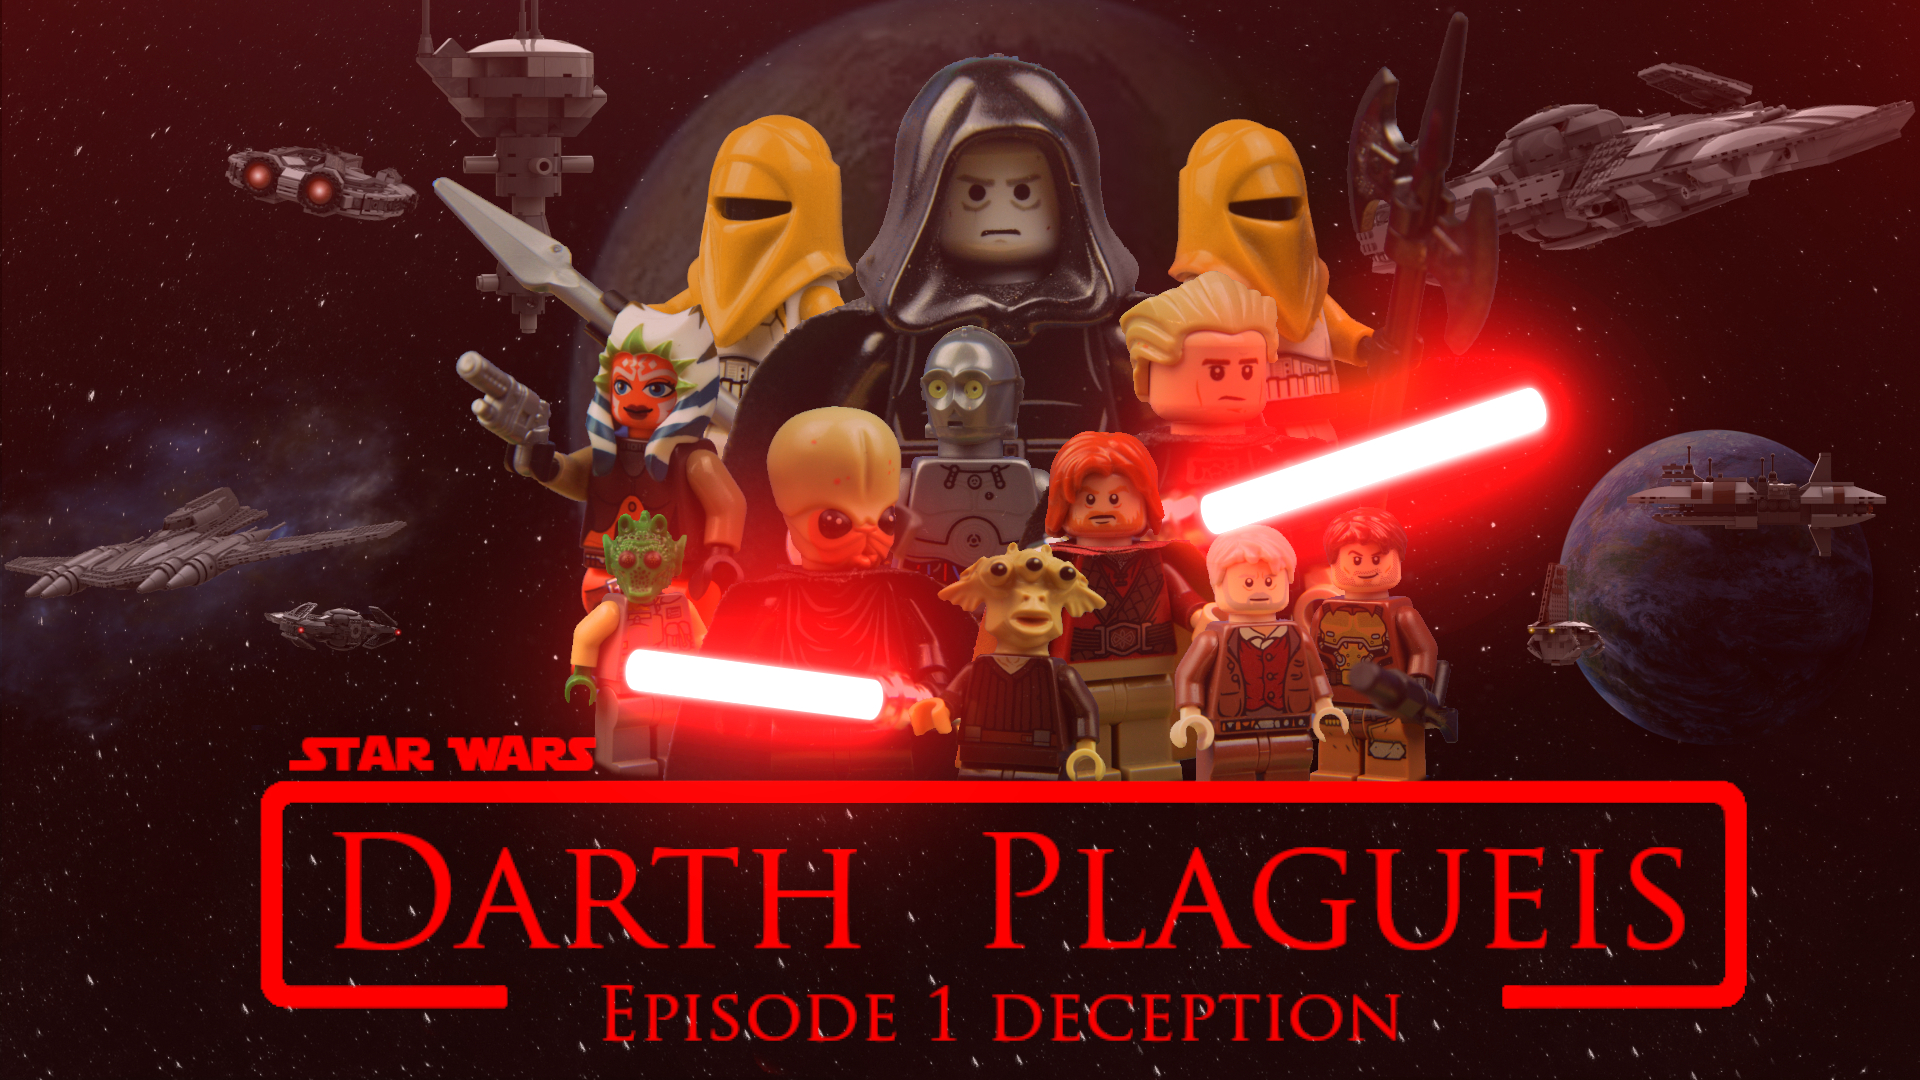 Plagueis episode in 1 appear did darth Star Wars: